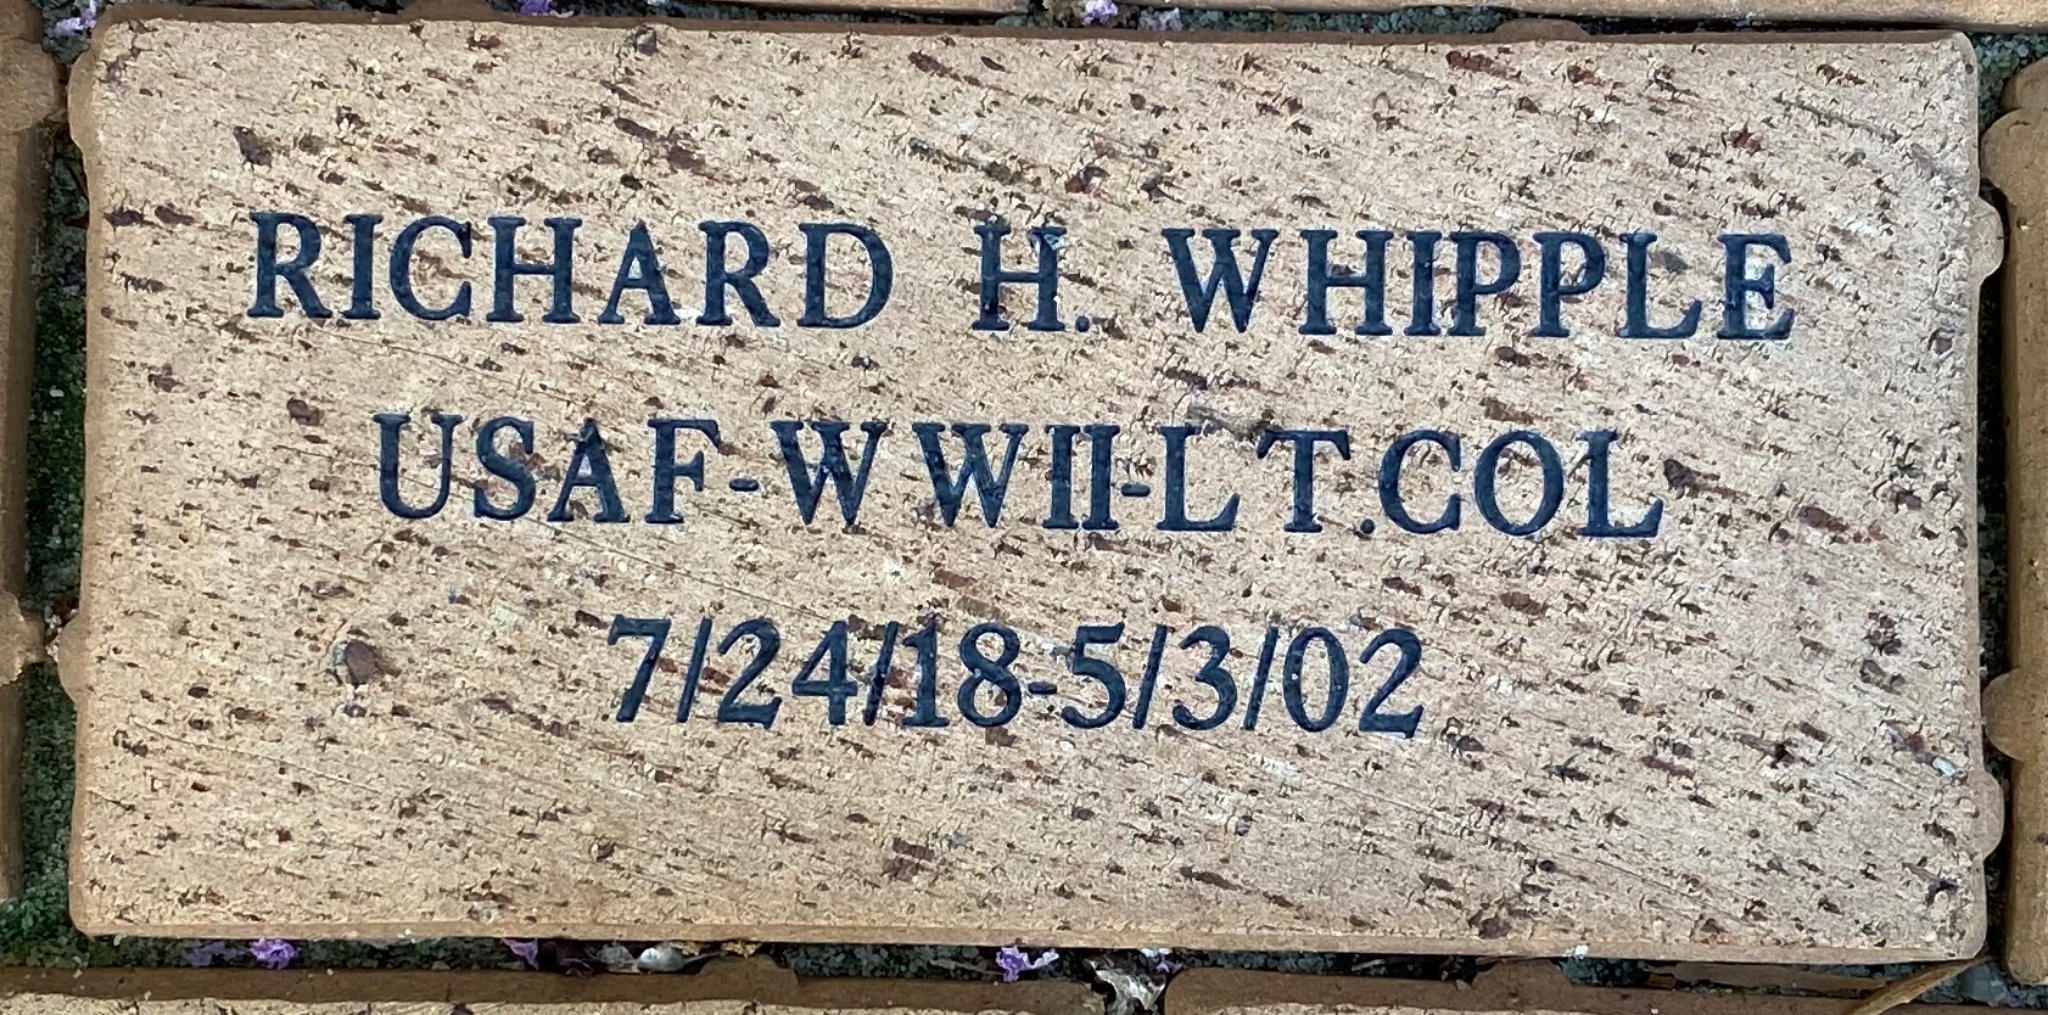 RICHARD H. WHIPPLE USAF-WWII-LT.COL 7/24/18-5/3/02